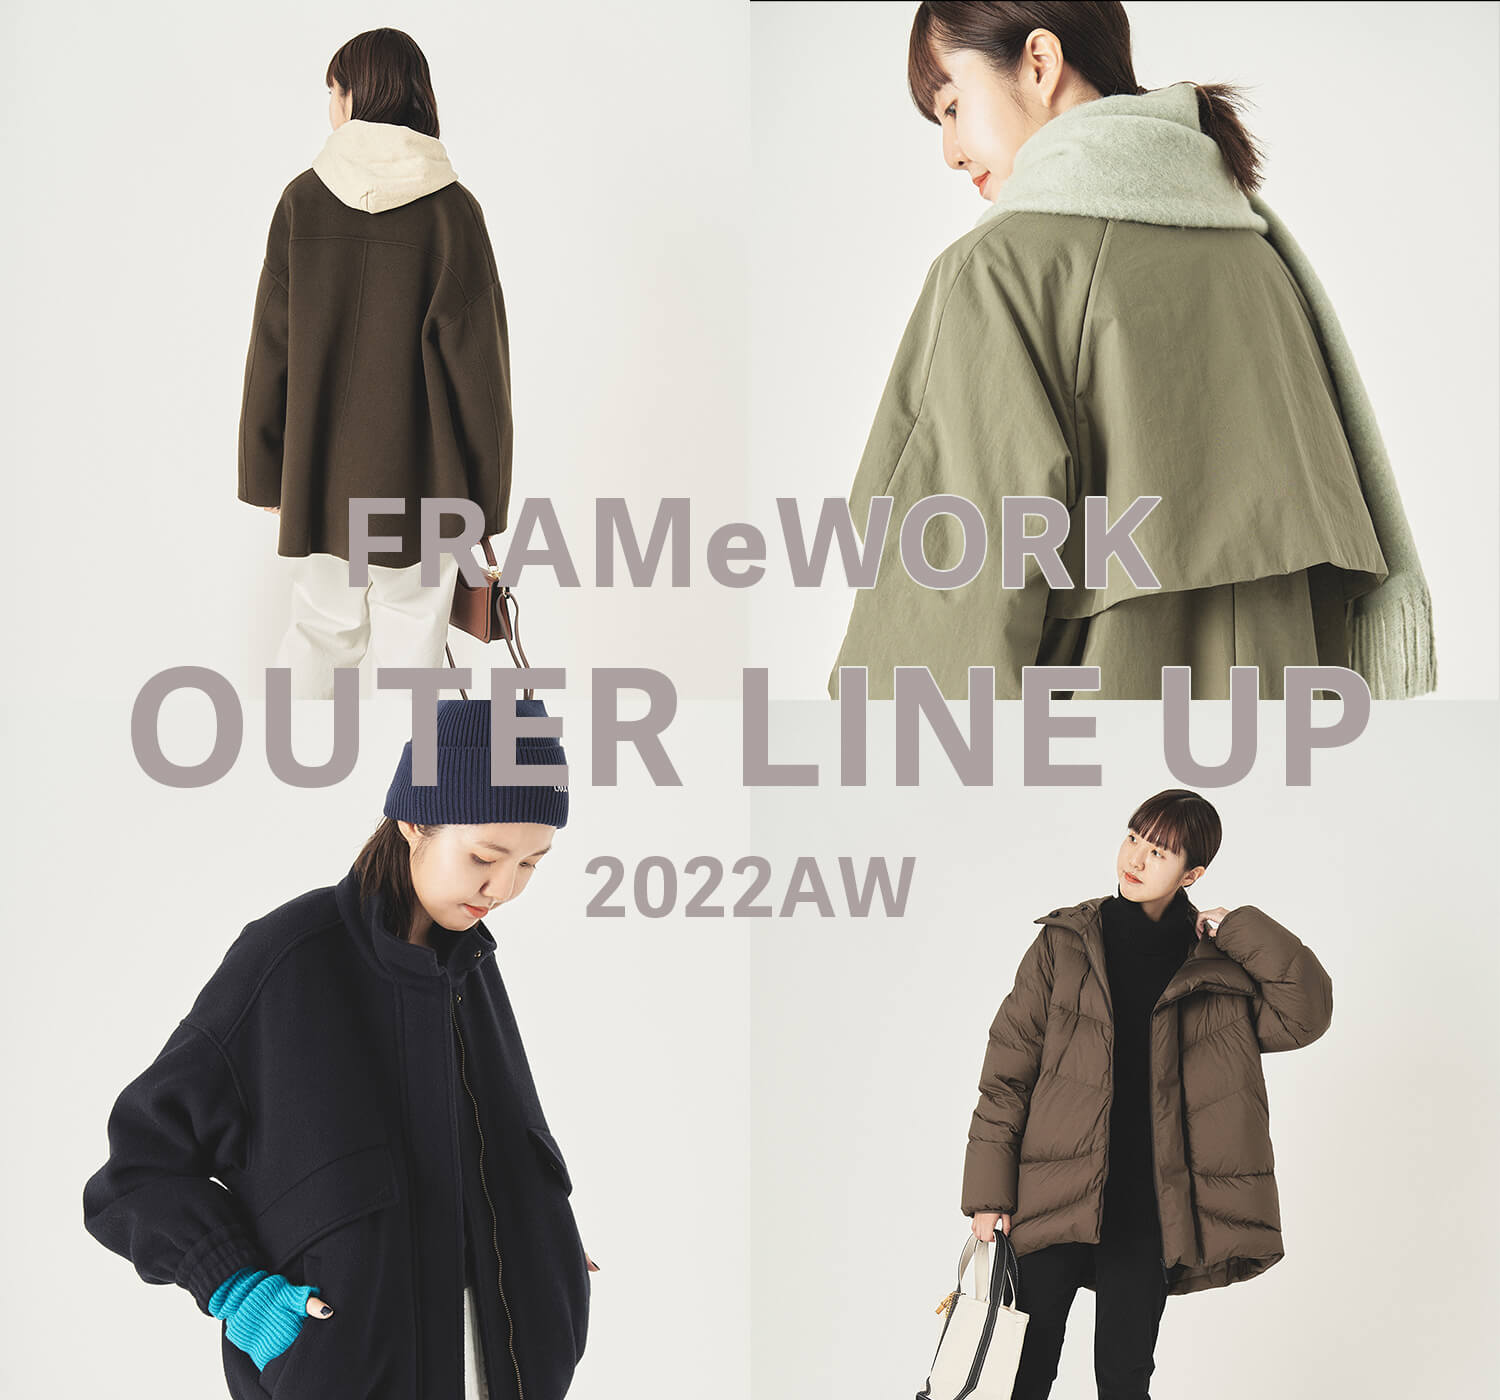 framework-outer-line-up-2022aw-framework-baycrew-s-store